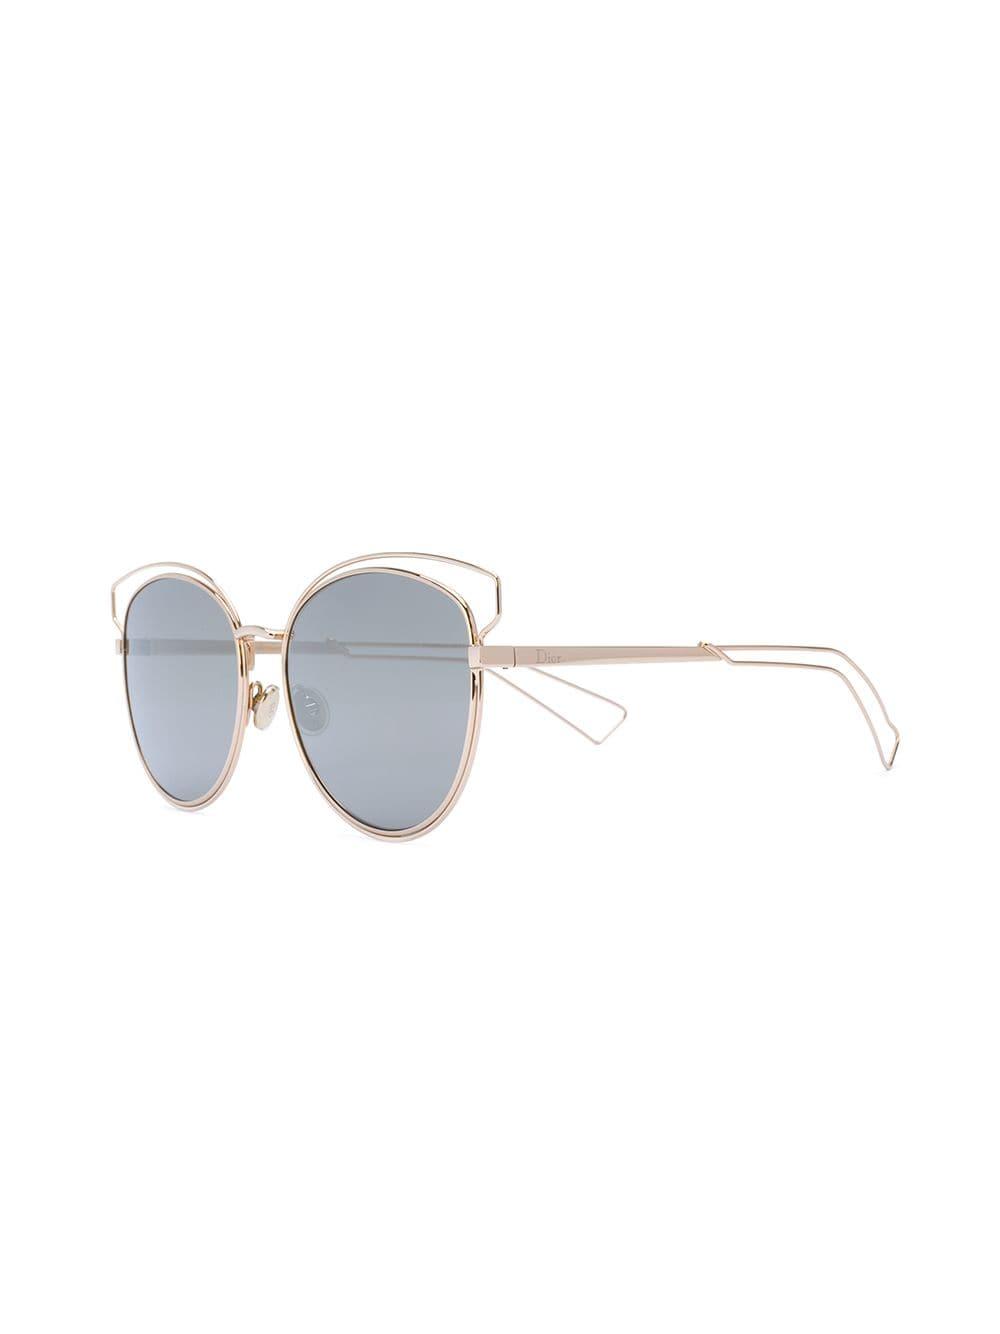 Dior Sideral 2 Sunglasses in Metallic | Lyst